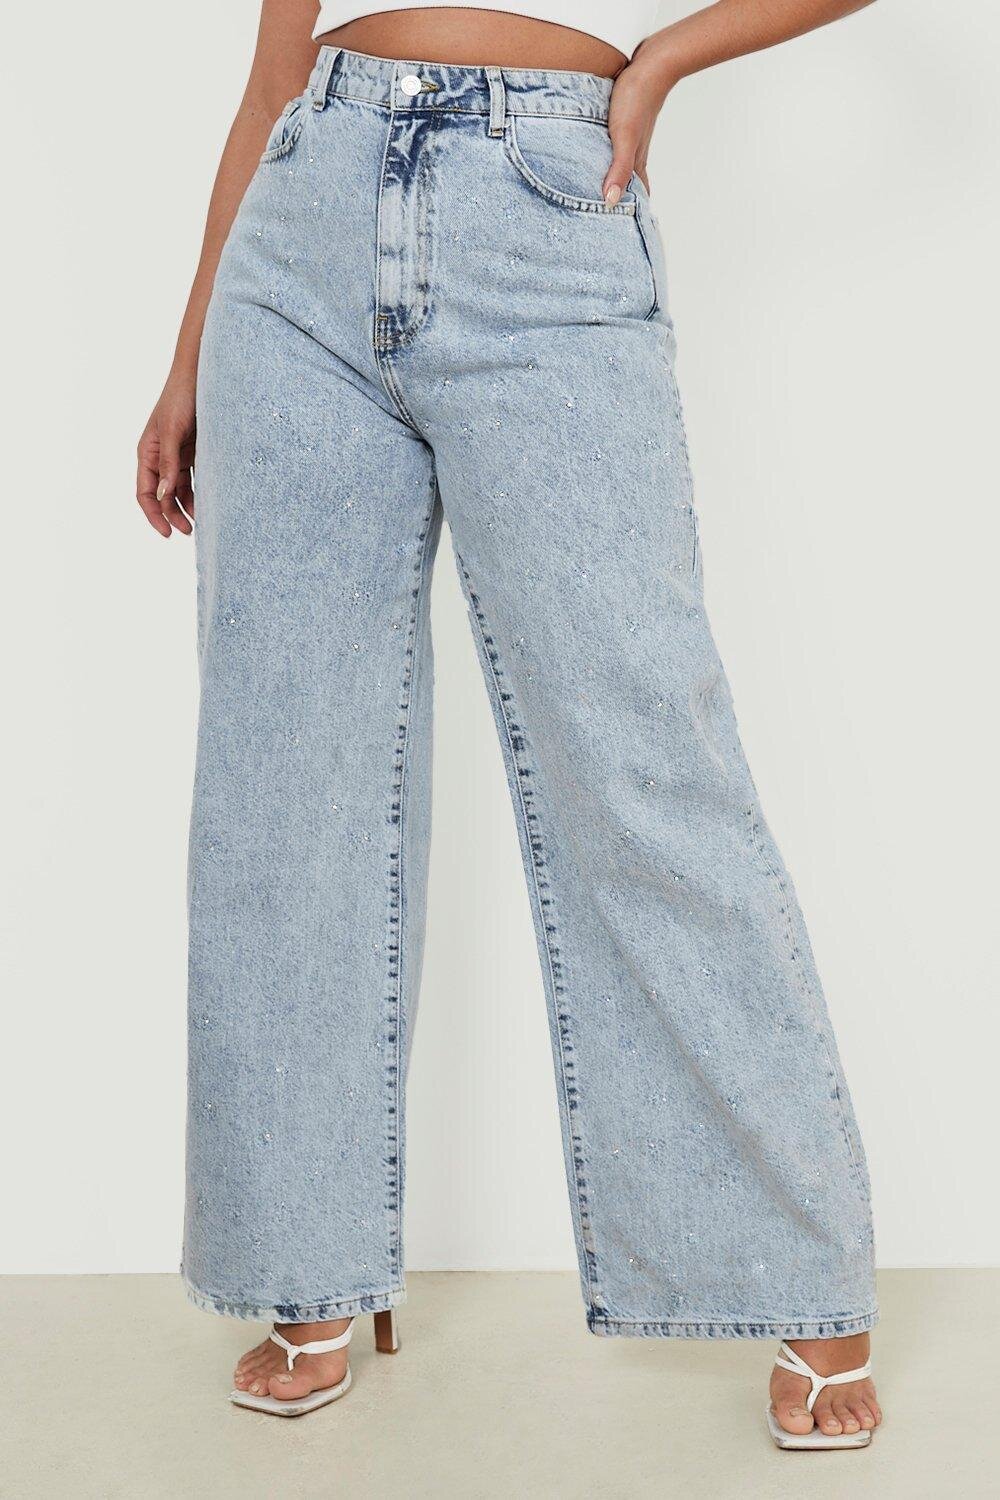 Buy Vintage Bonjour Jeans Size 16 High Waist Women Online in India